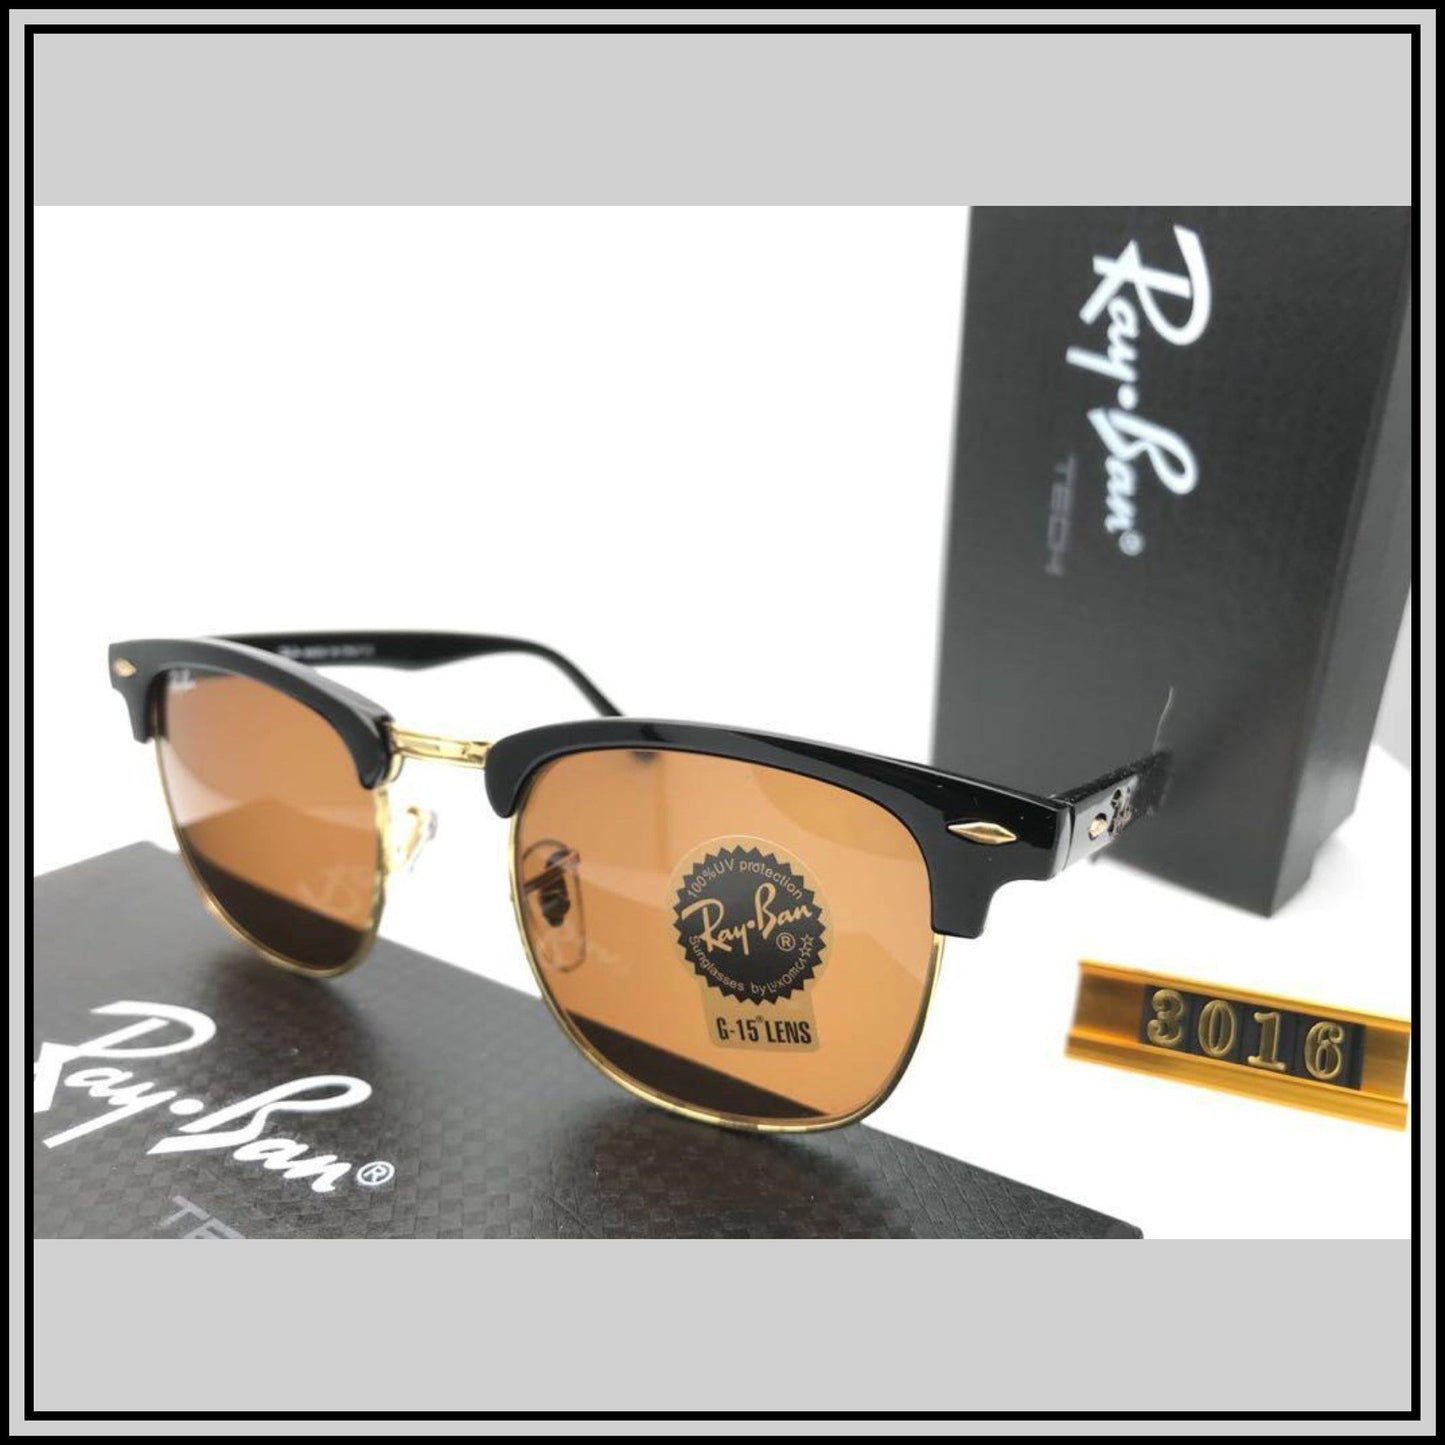 Brown & Gold ( 3016 ) New 26-mm Men's Sunglasses.